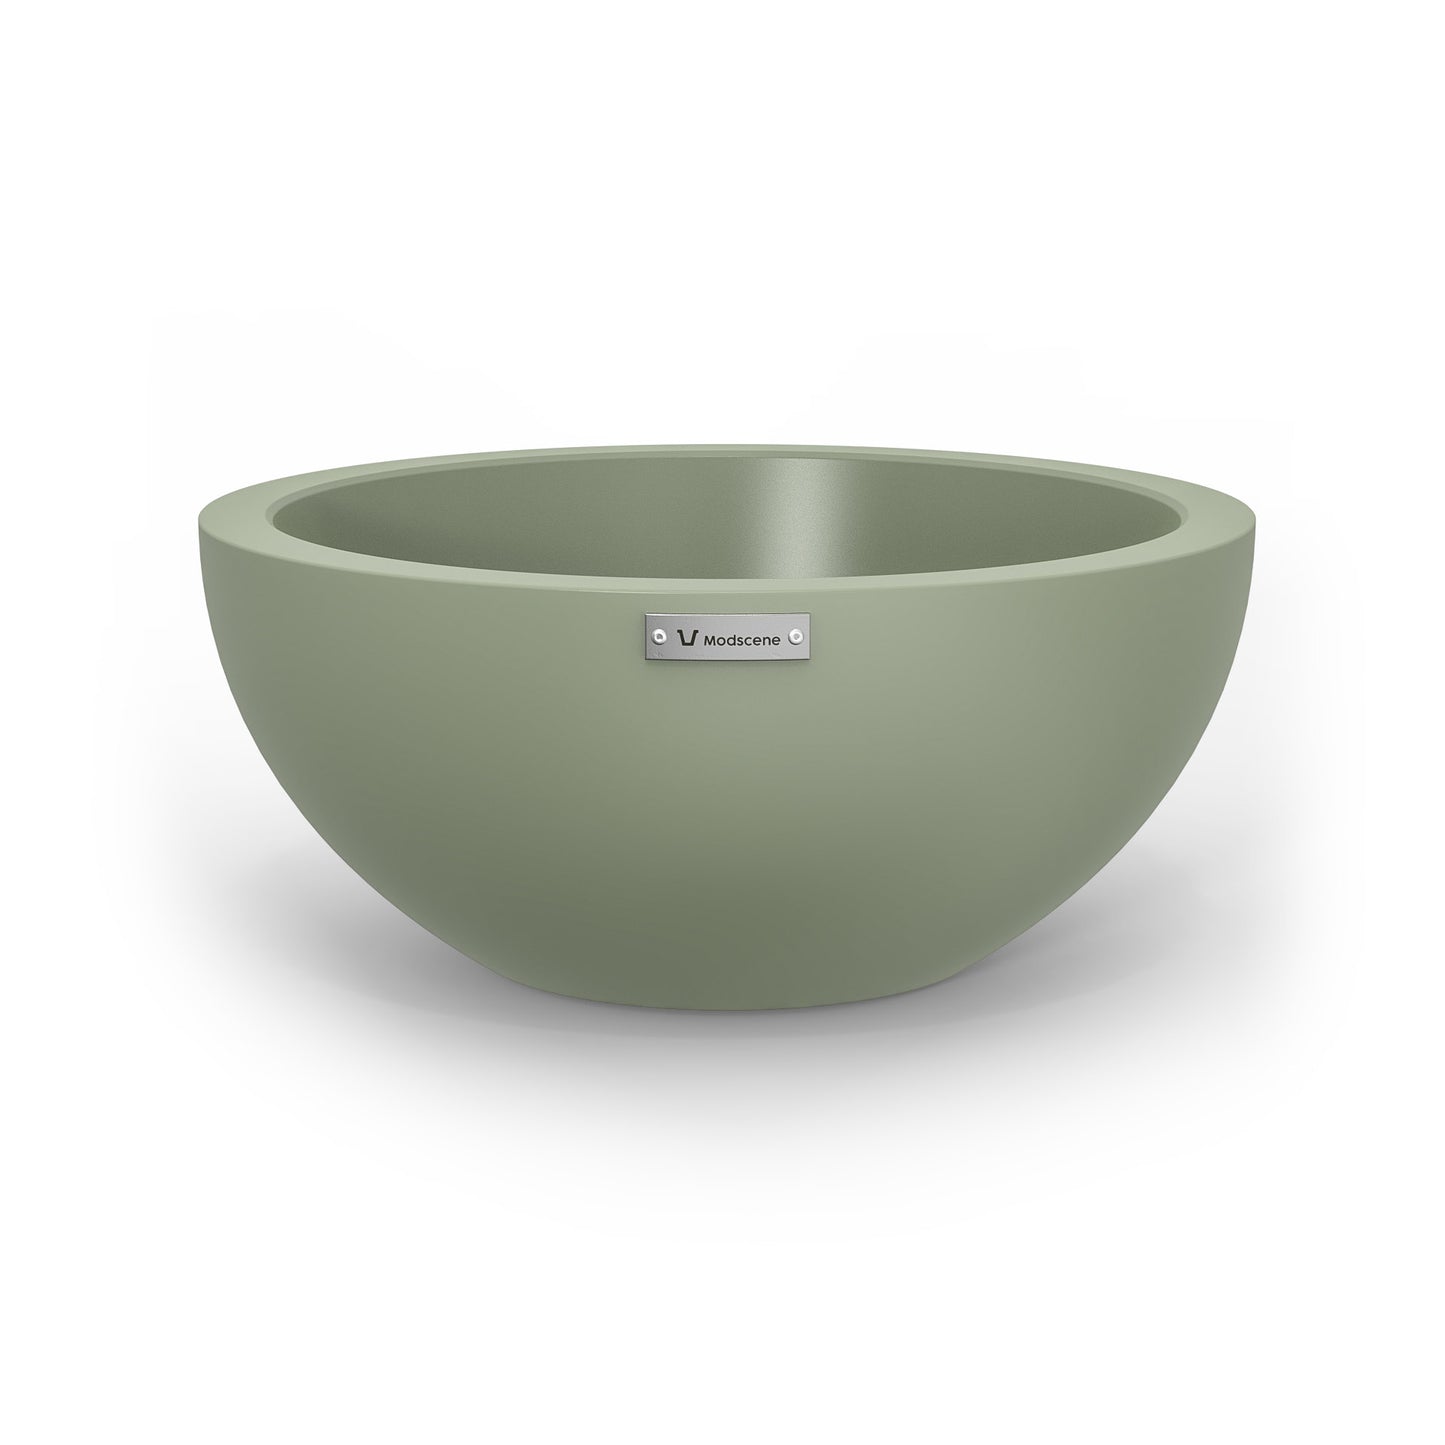 A small Modscene planter bowl in a pastel green colour.